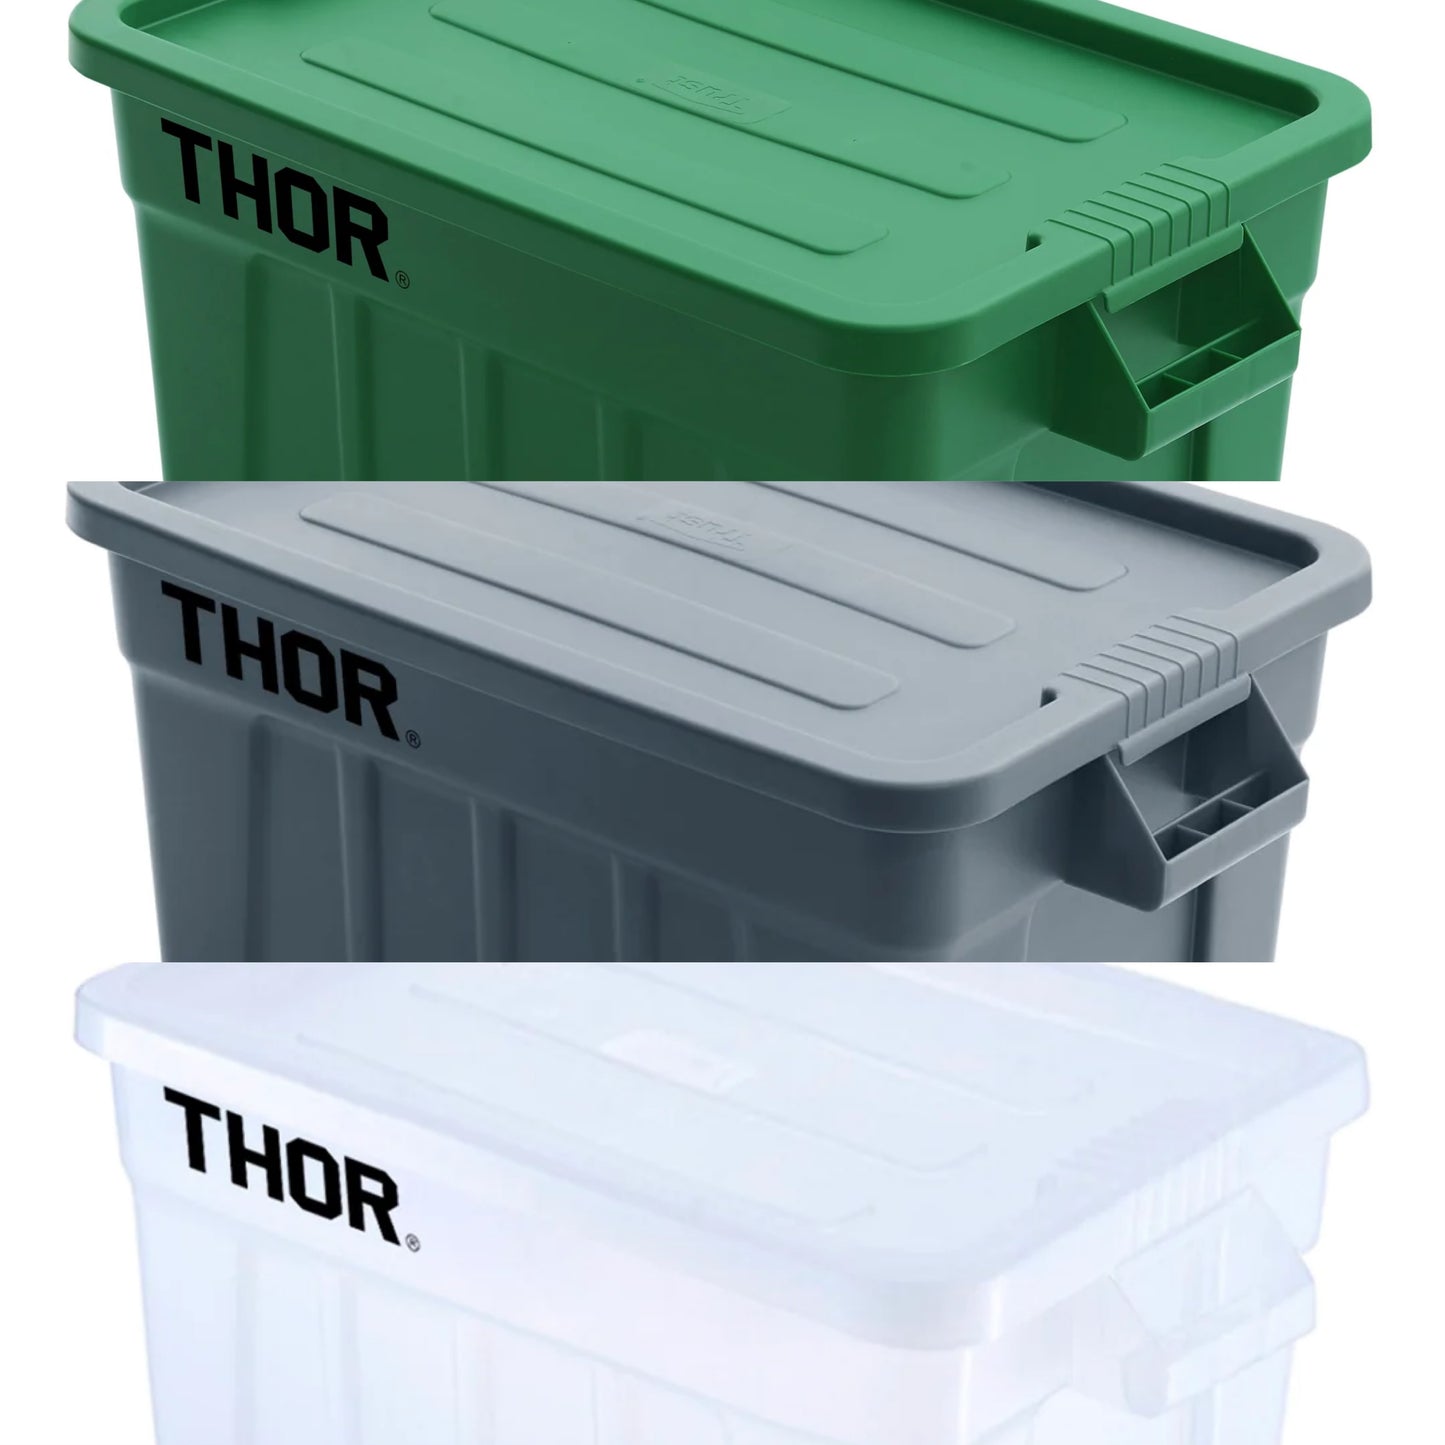 Thor Storage Box with Lid箱